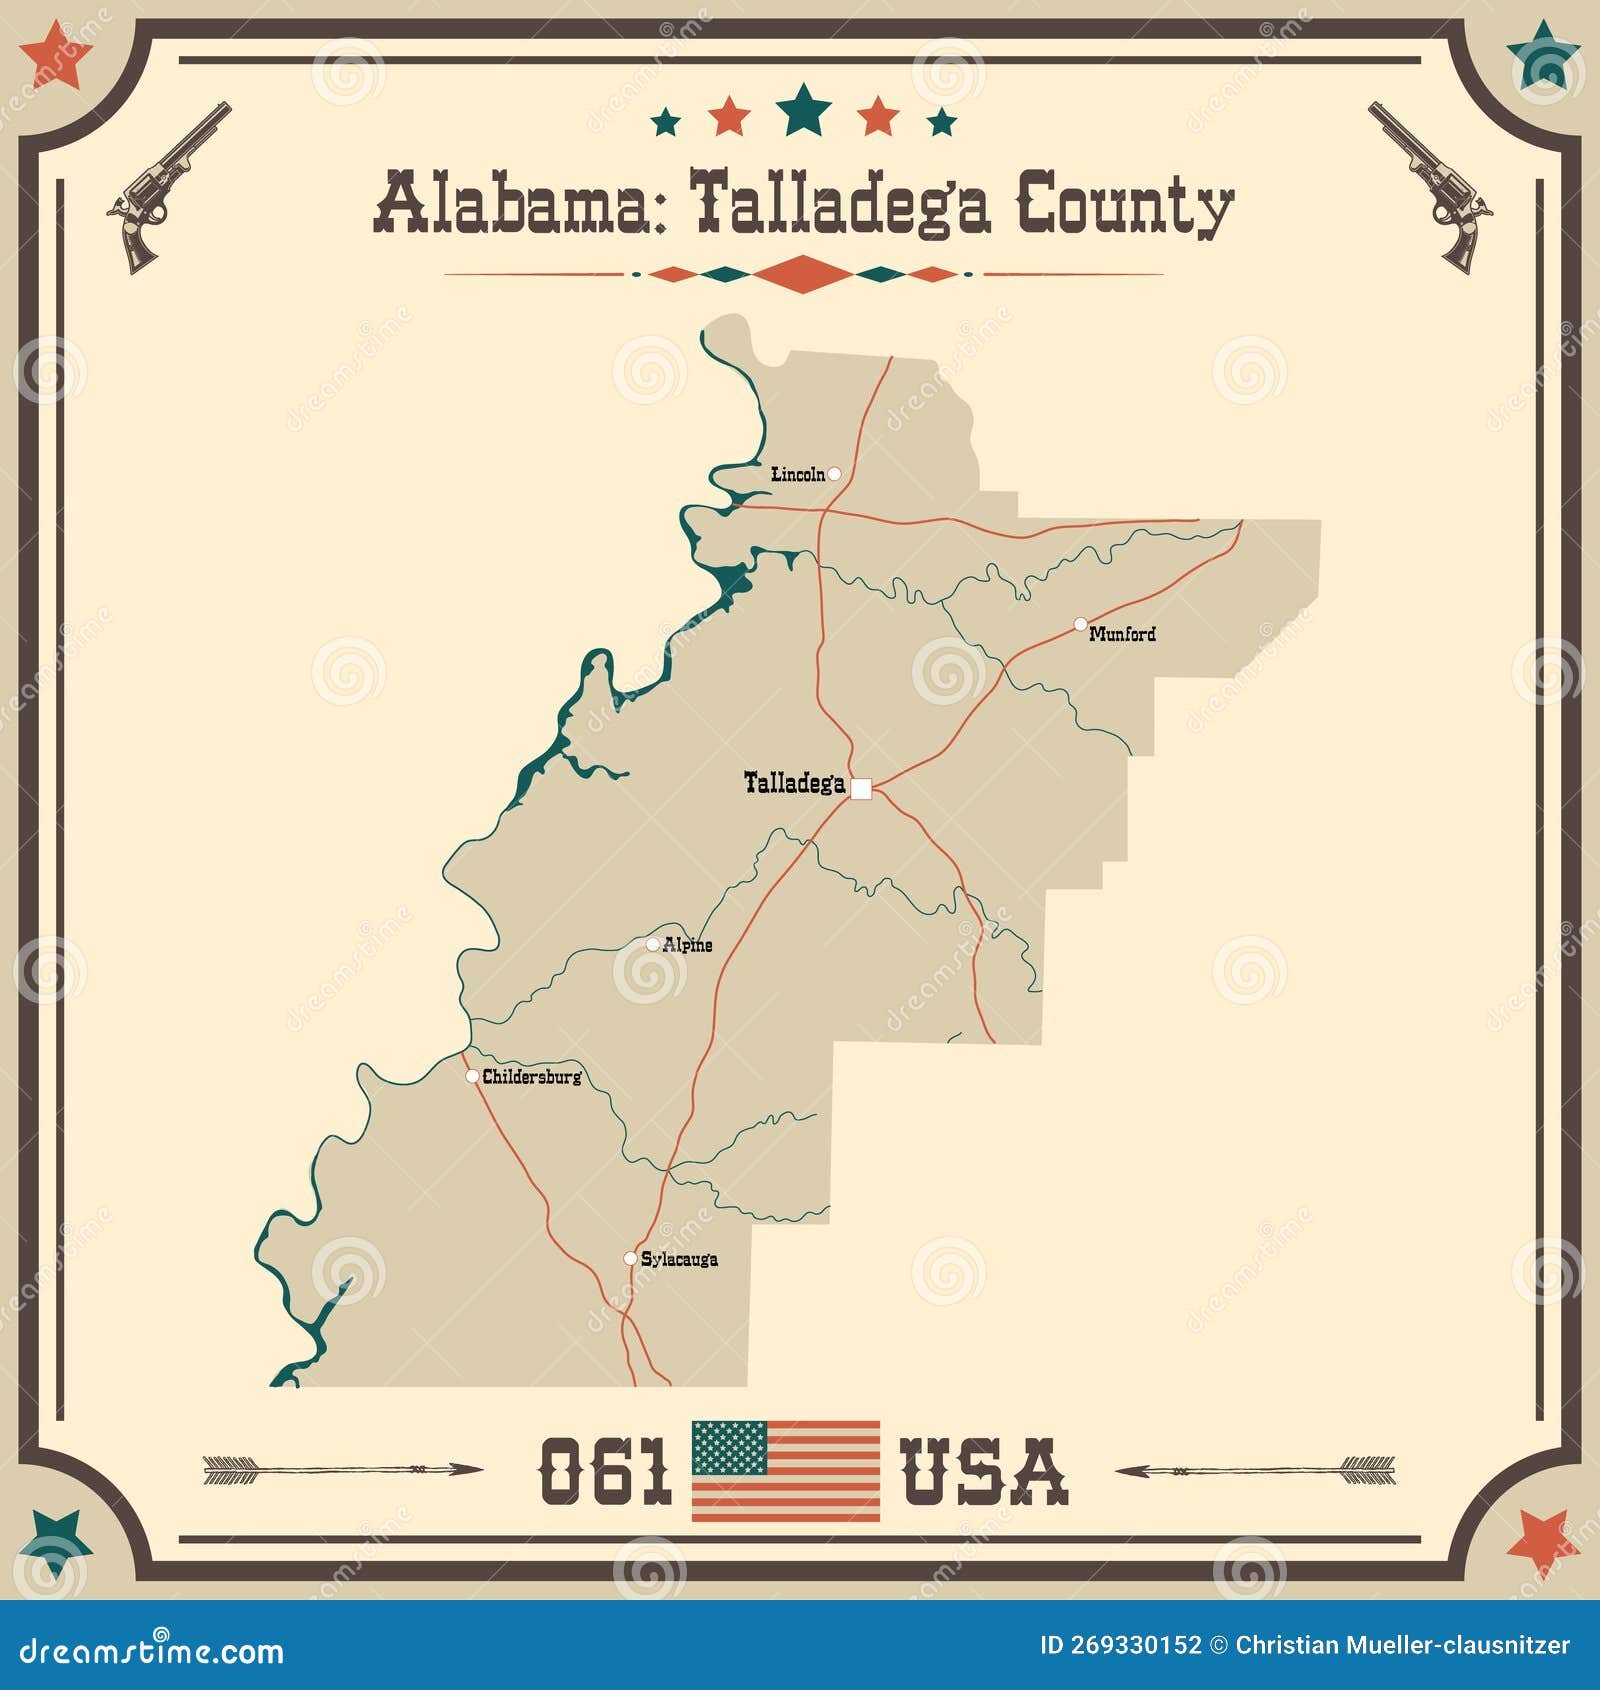 vintage map of talladega county in alabama, usa.